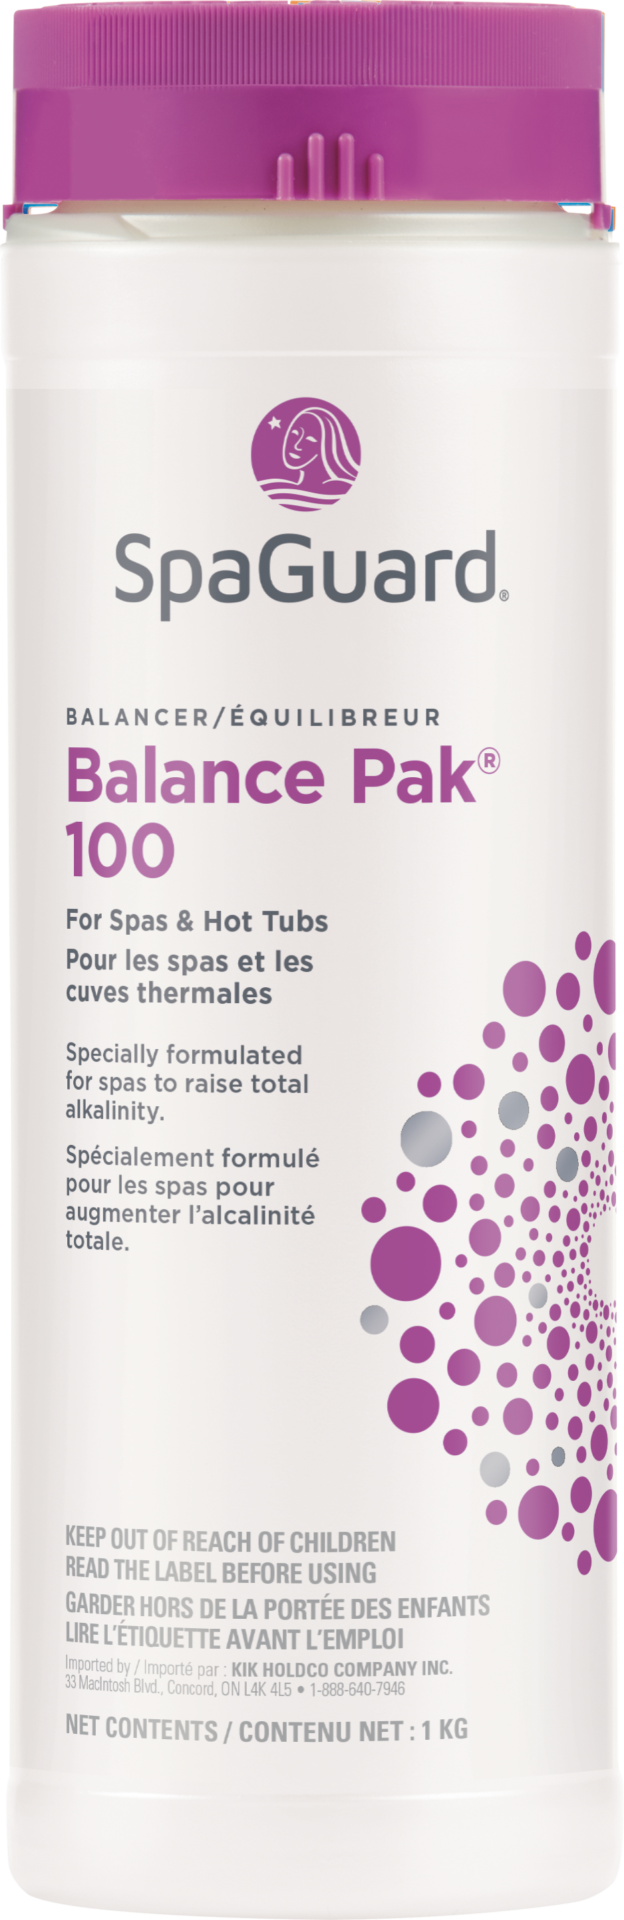 SpaGuard Balance Pak 100 1kg - SPAGUARD SPA BALANCE PAK 100 - 1kg